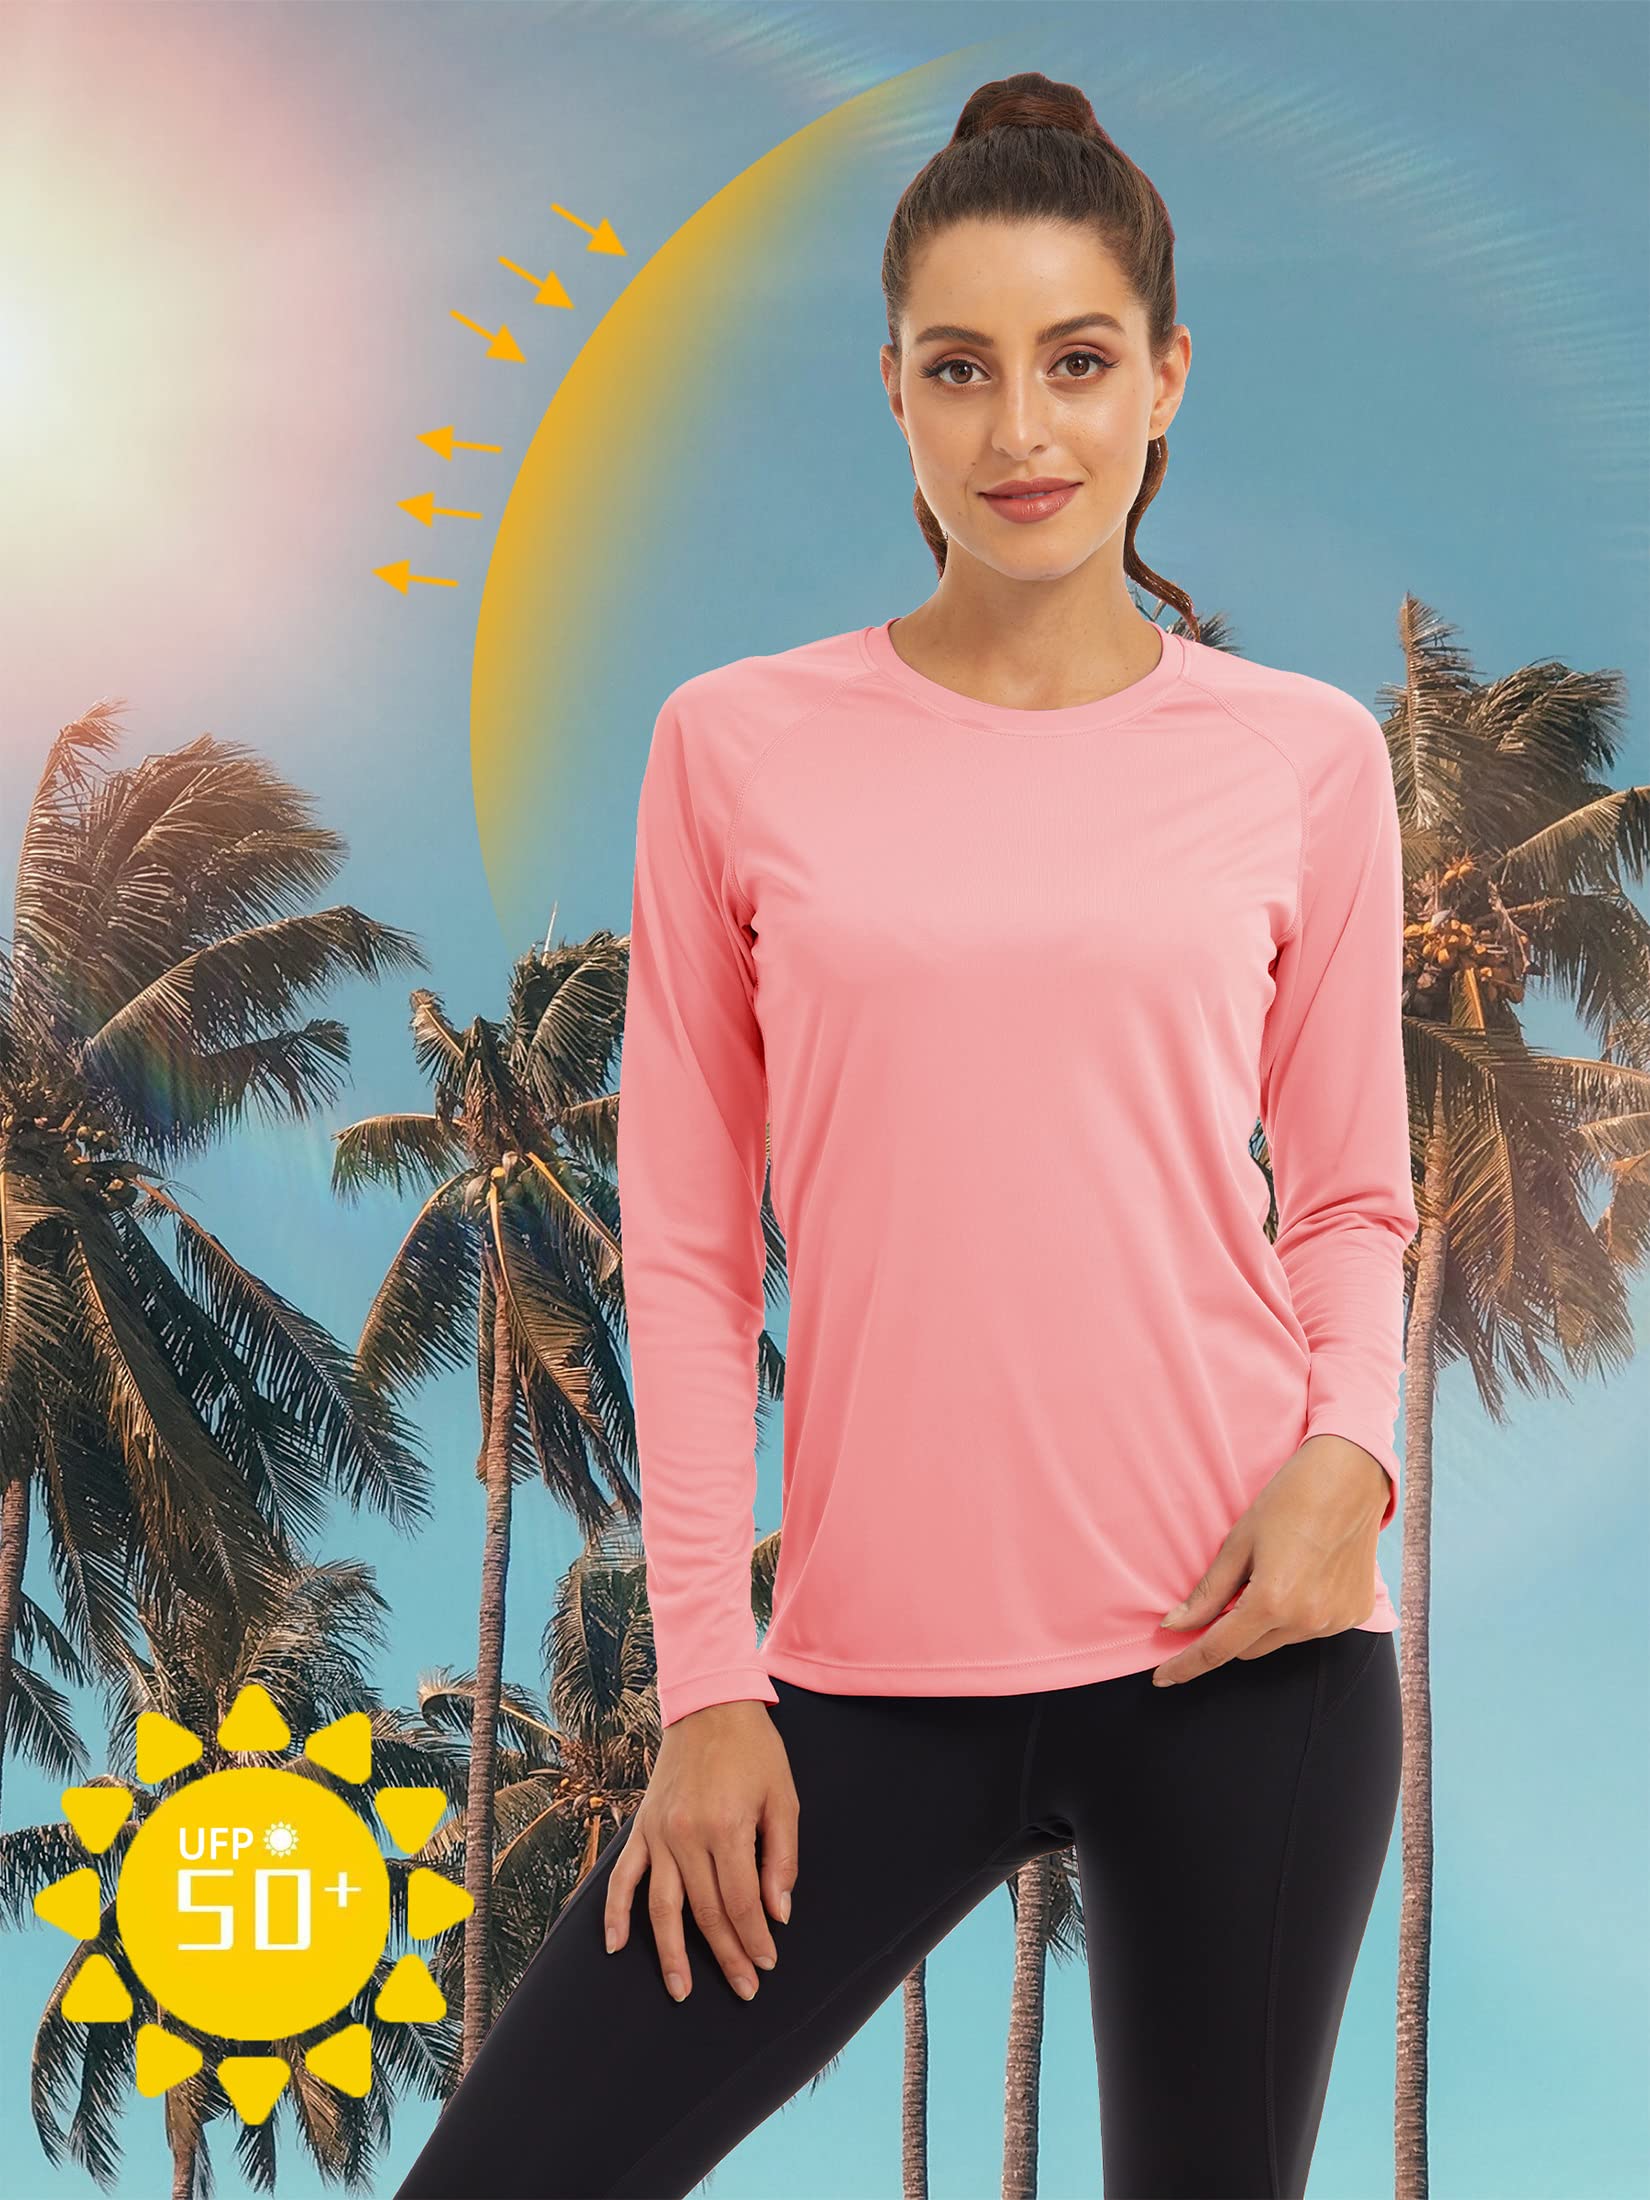 TACVASEN Women's Sun Protection Shirt UPF 50+ Long Sleeve Hiking Running Sport Workout Rash Guards Tops